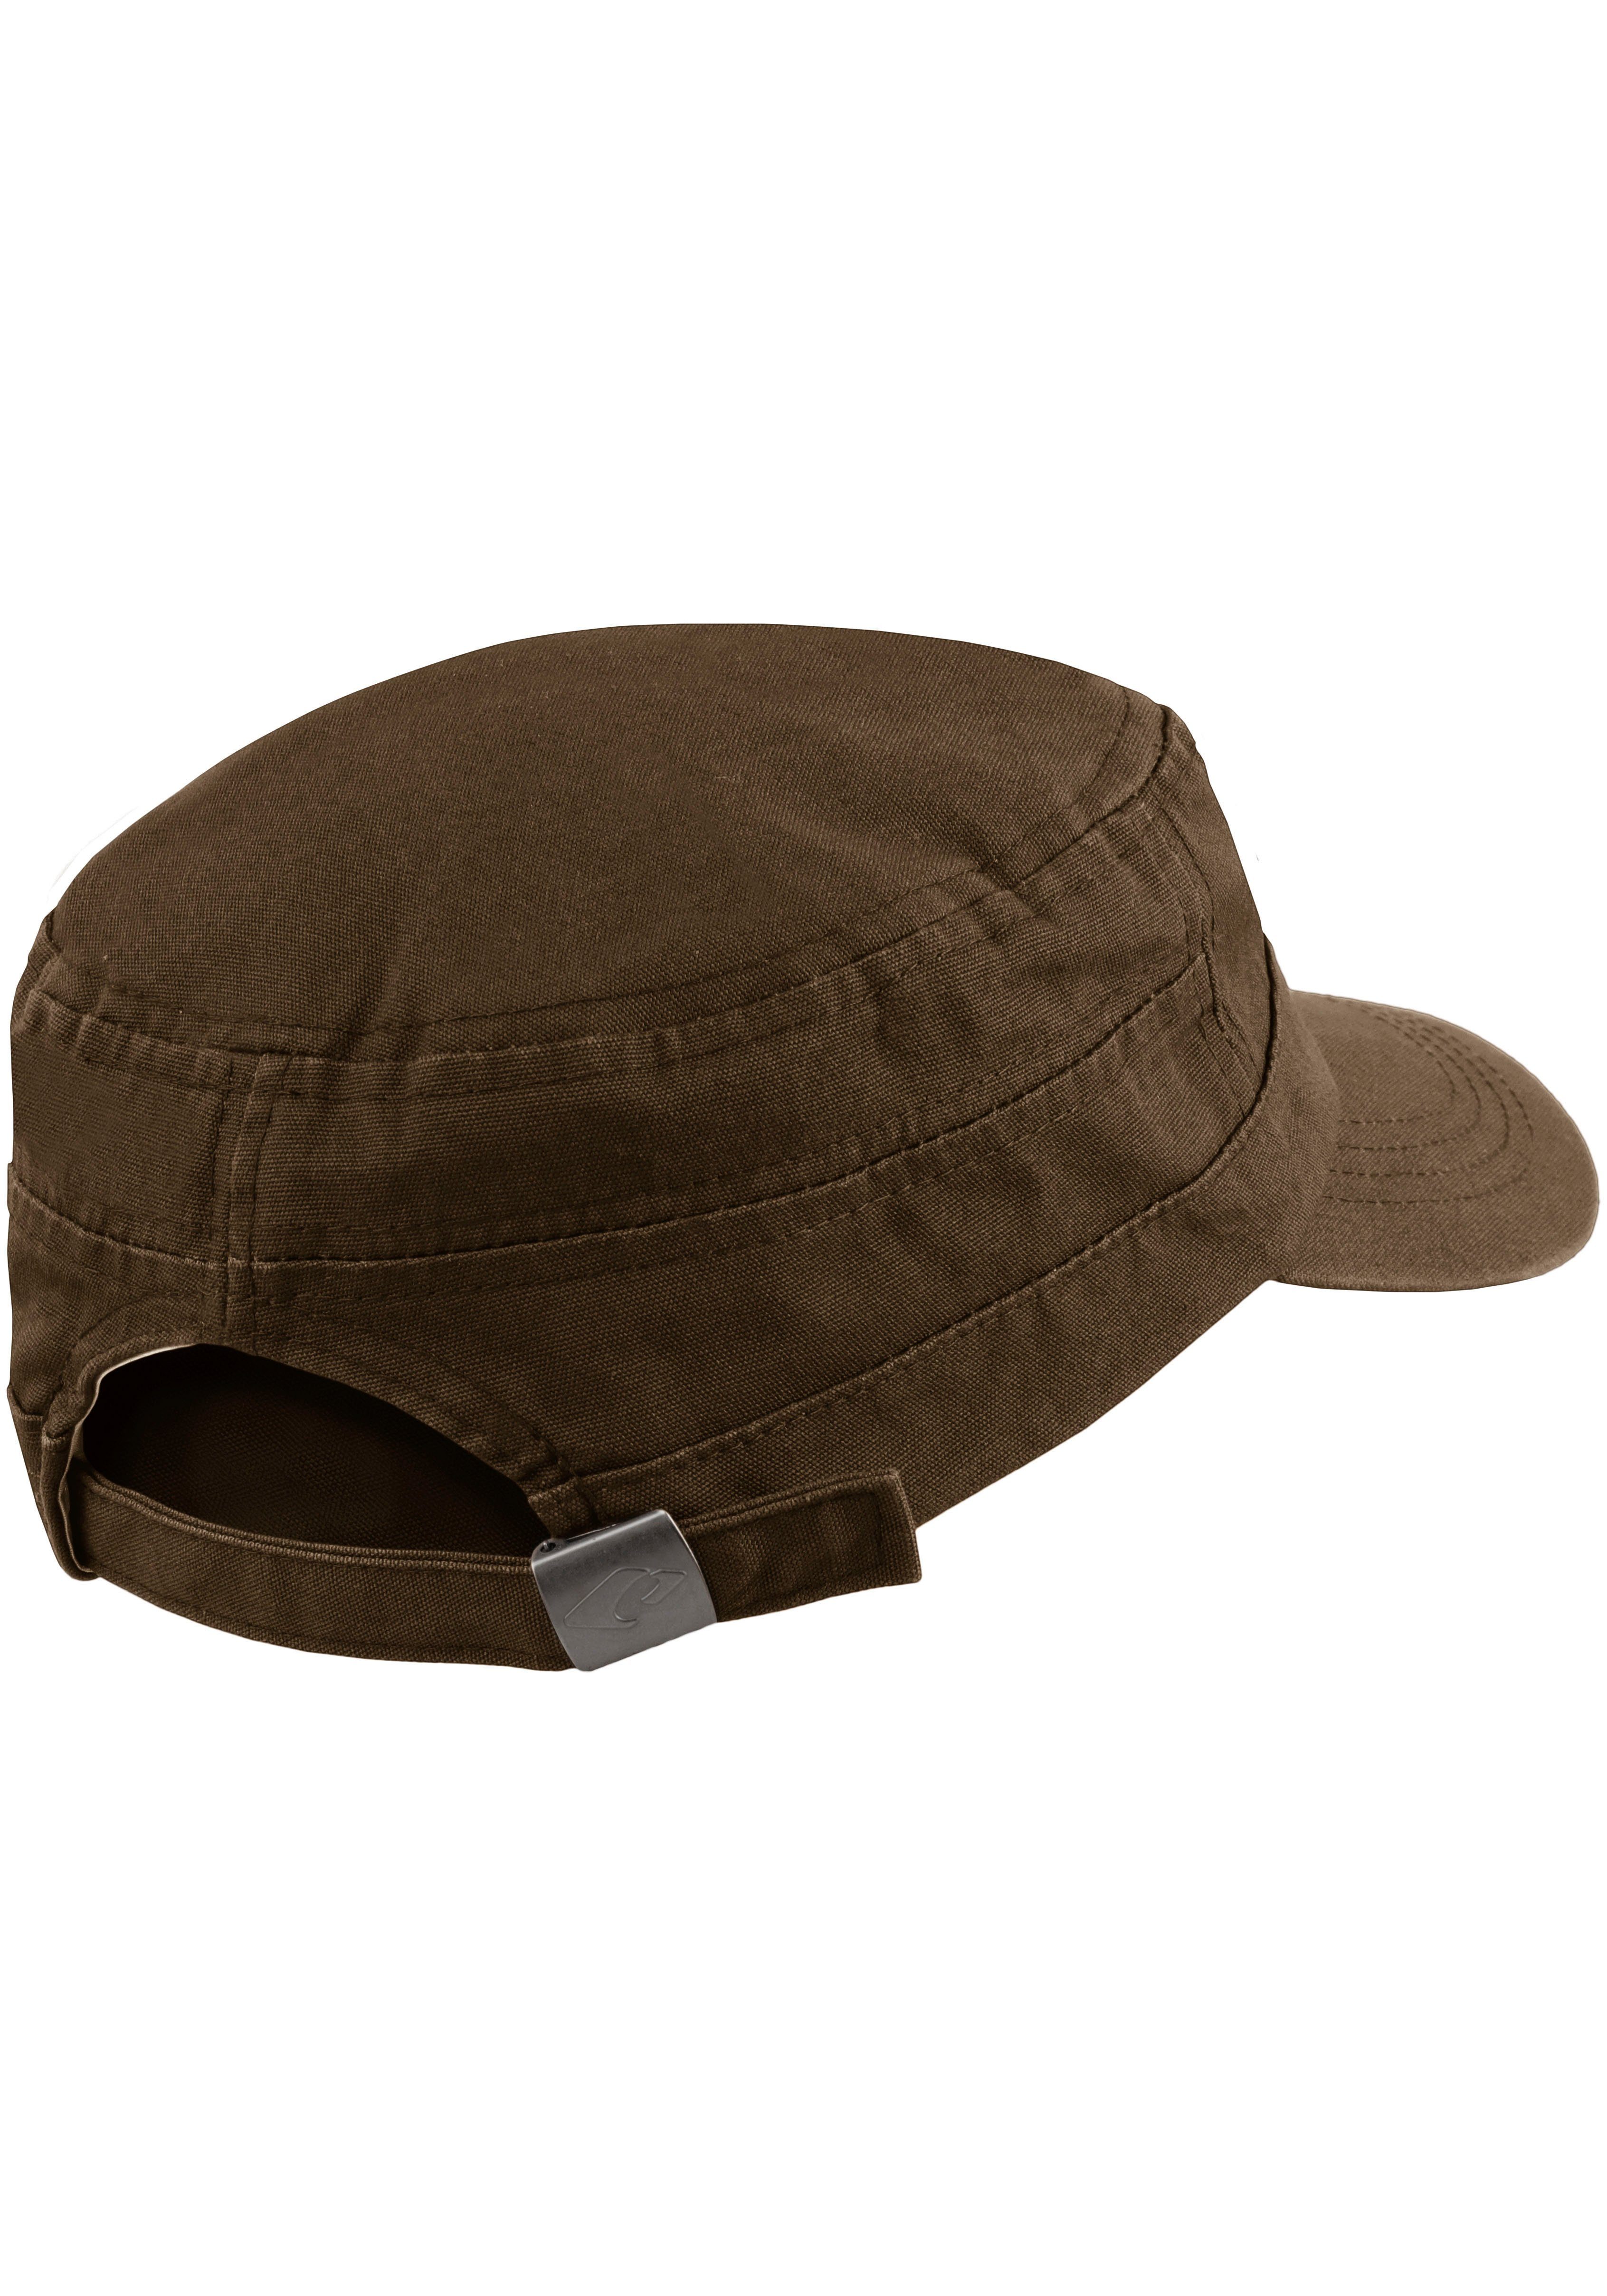 aus One El chillouts Baumwolle, Paso braun Size Army Hat Cap reiner atmungsaktiv,